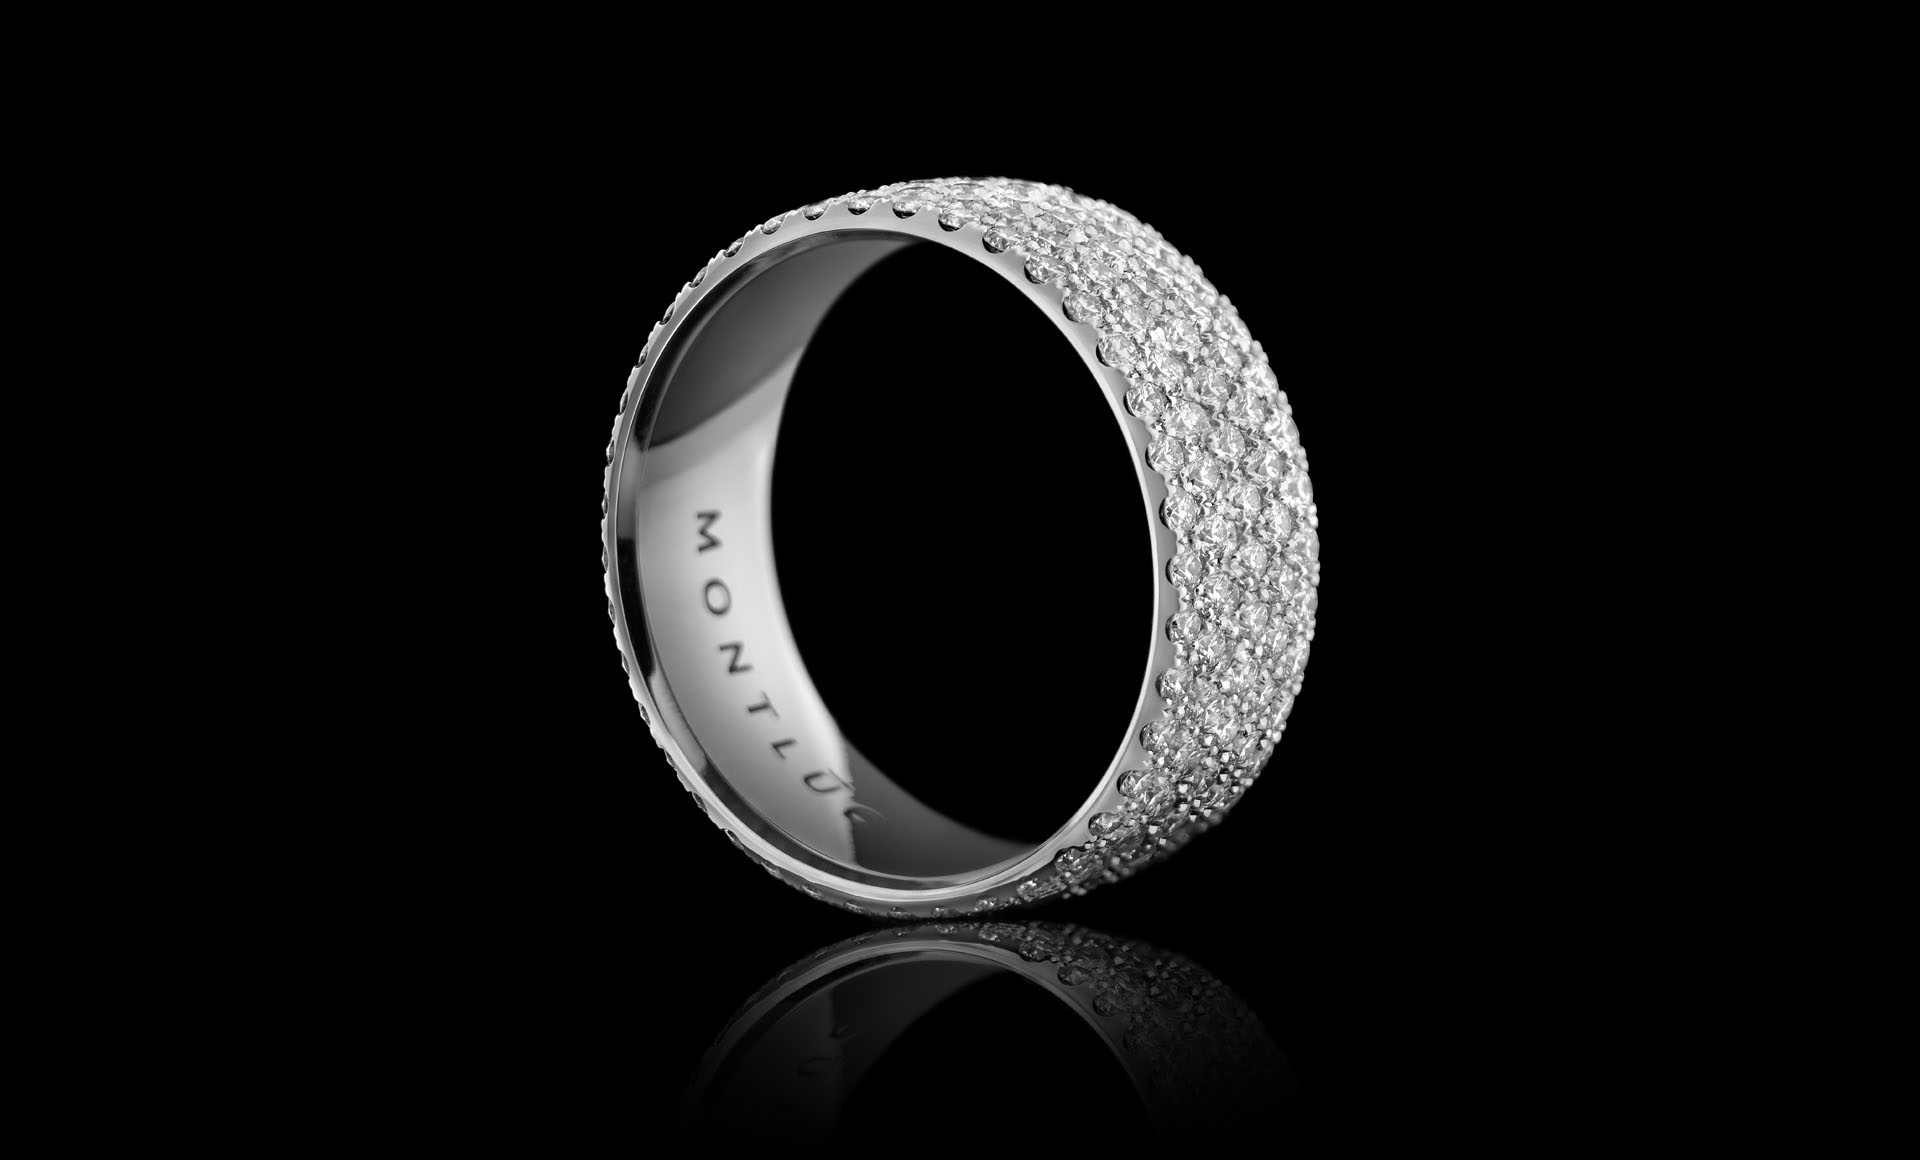 Constellation No.2 - a beautiful 5-row diamond ring